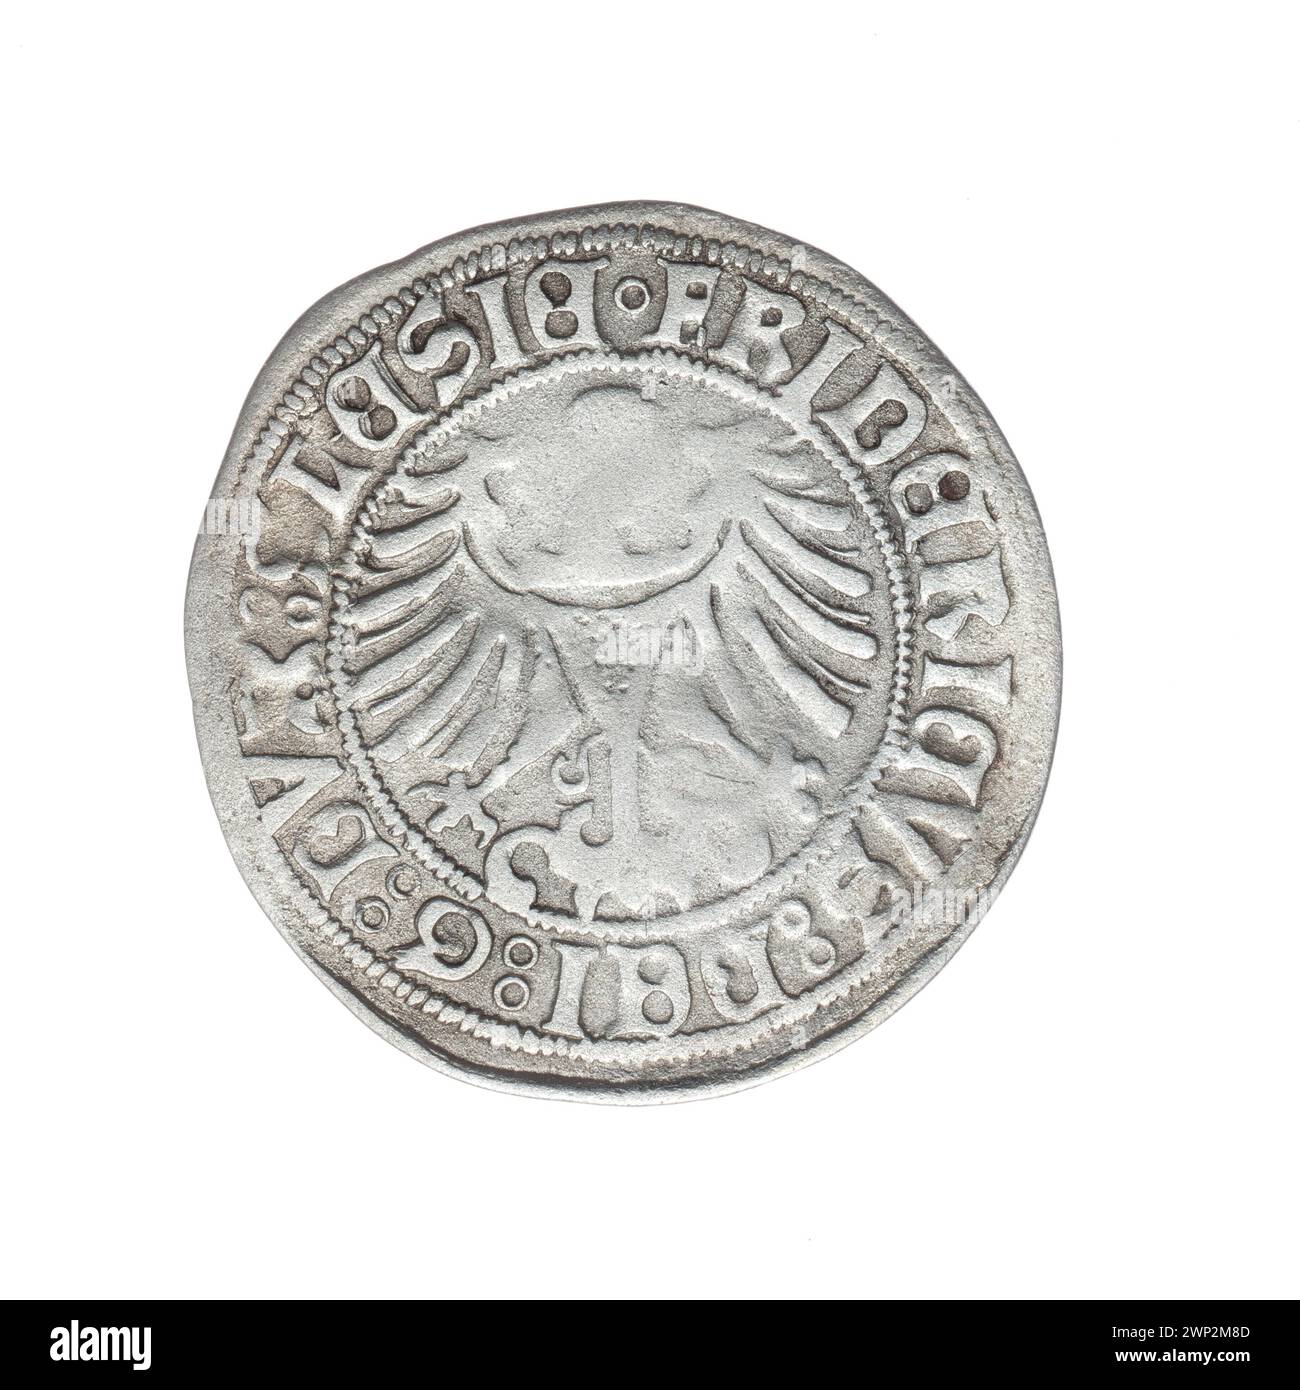 penny; Fryderyk II (KSI Brzesko-Legnicki; 1480-1547); 1505-1547 (1505-00-00-1547-00-00-00); Jadwiga Śląska (St. - Circa 1179-1243), modello di chiesa, Aquila slesiana (iconogr.), Aquile Foto Stock